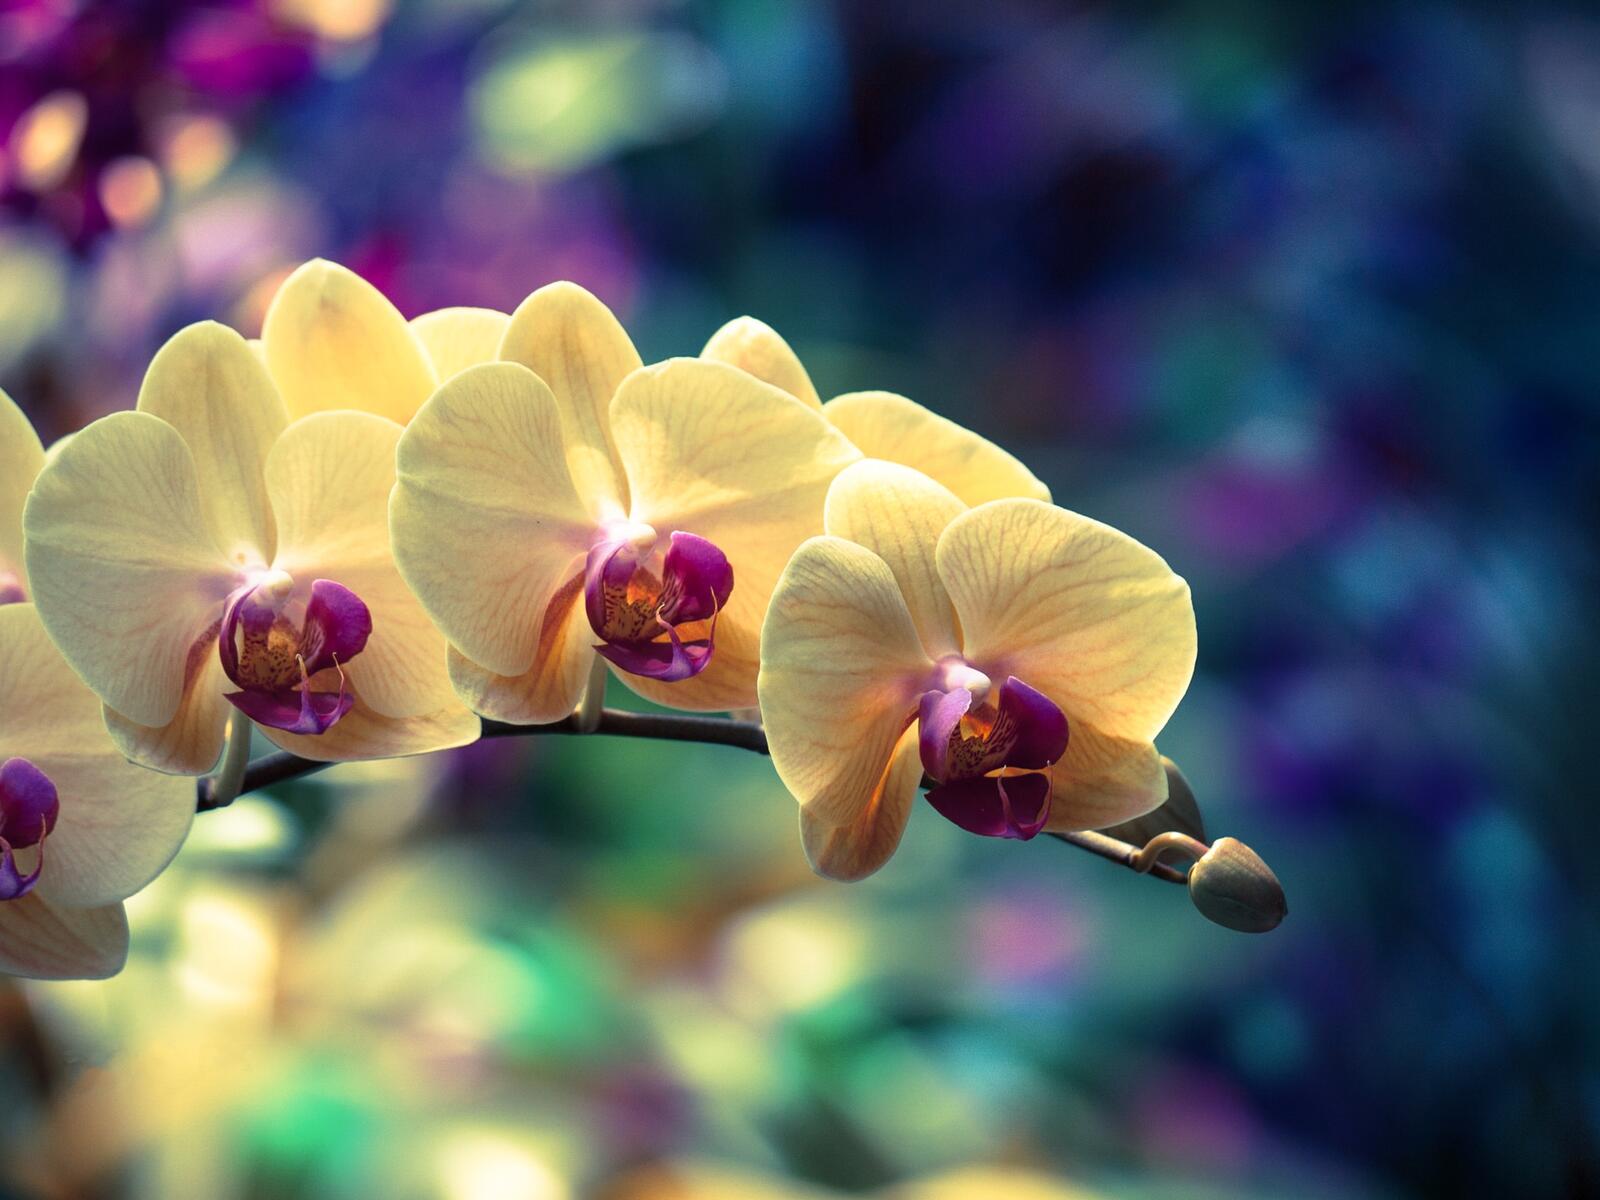 Бесплатное фото Веточка орхидеи